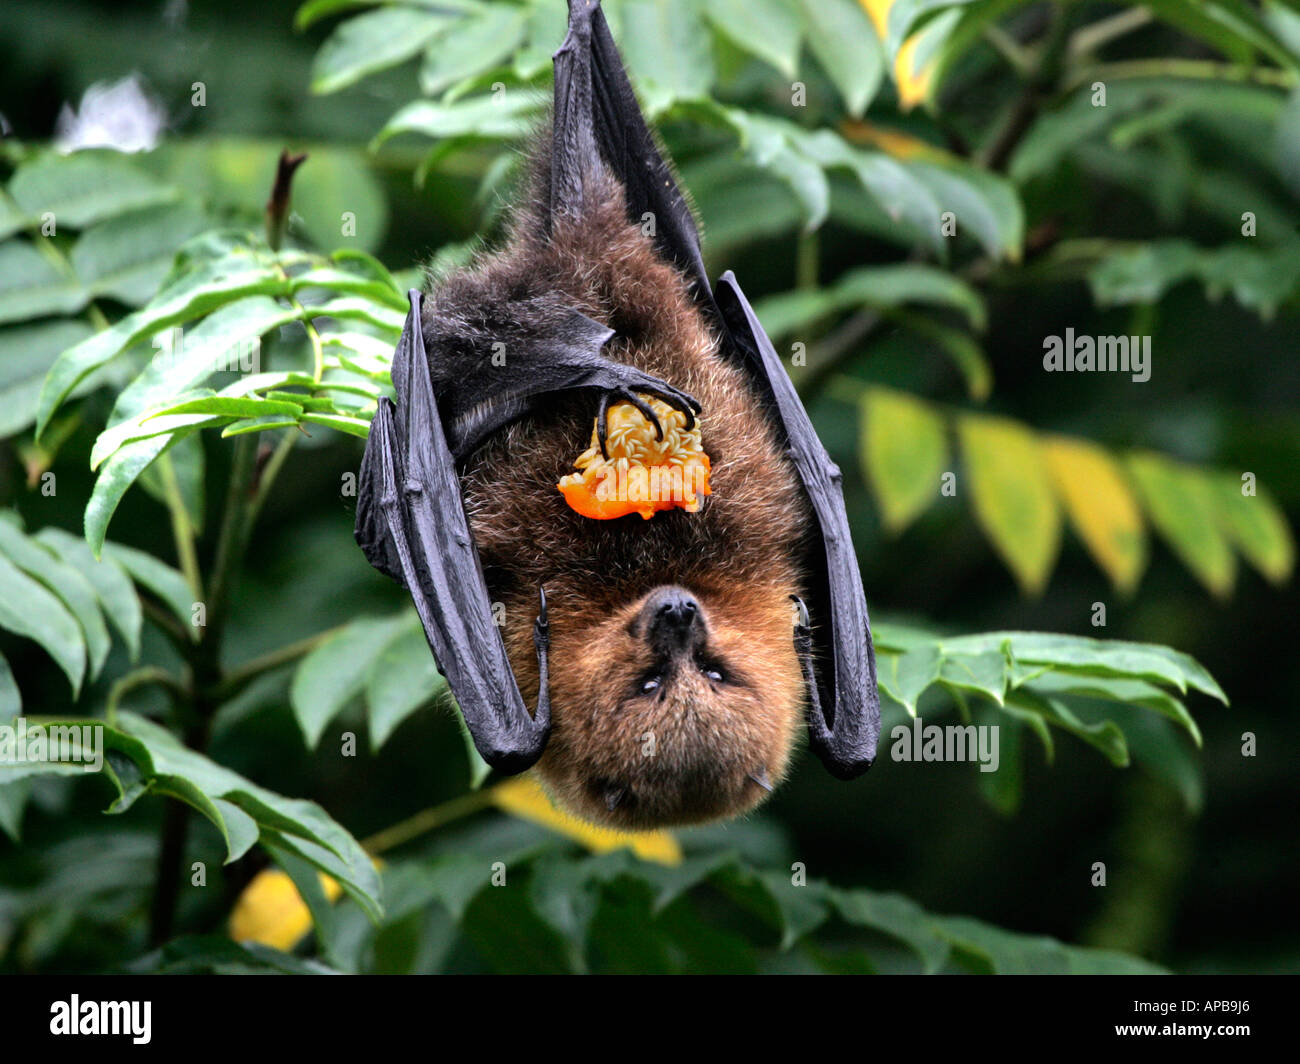 A fruitbat hanging upside down eating fruit. Stock Photo